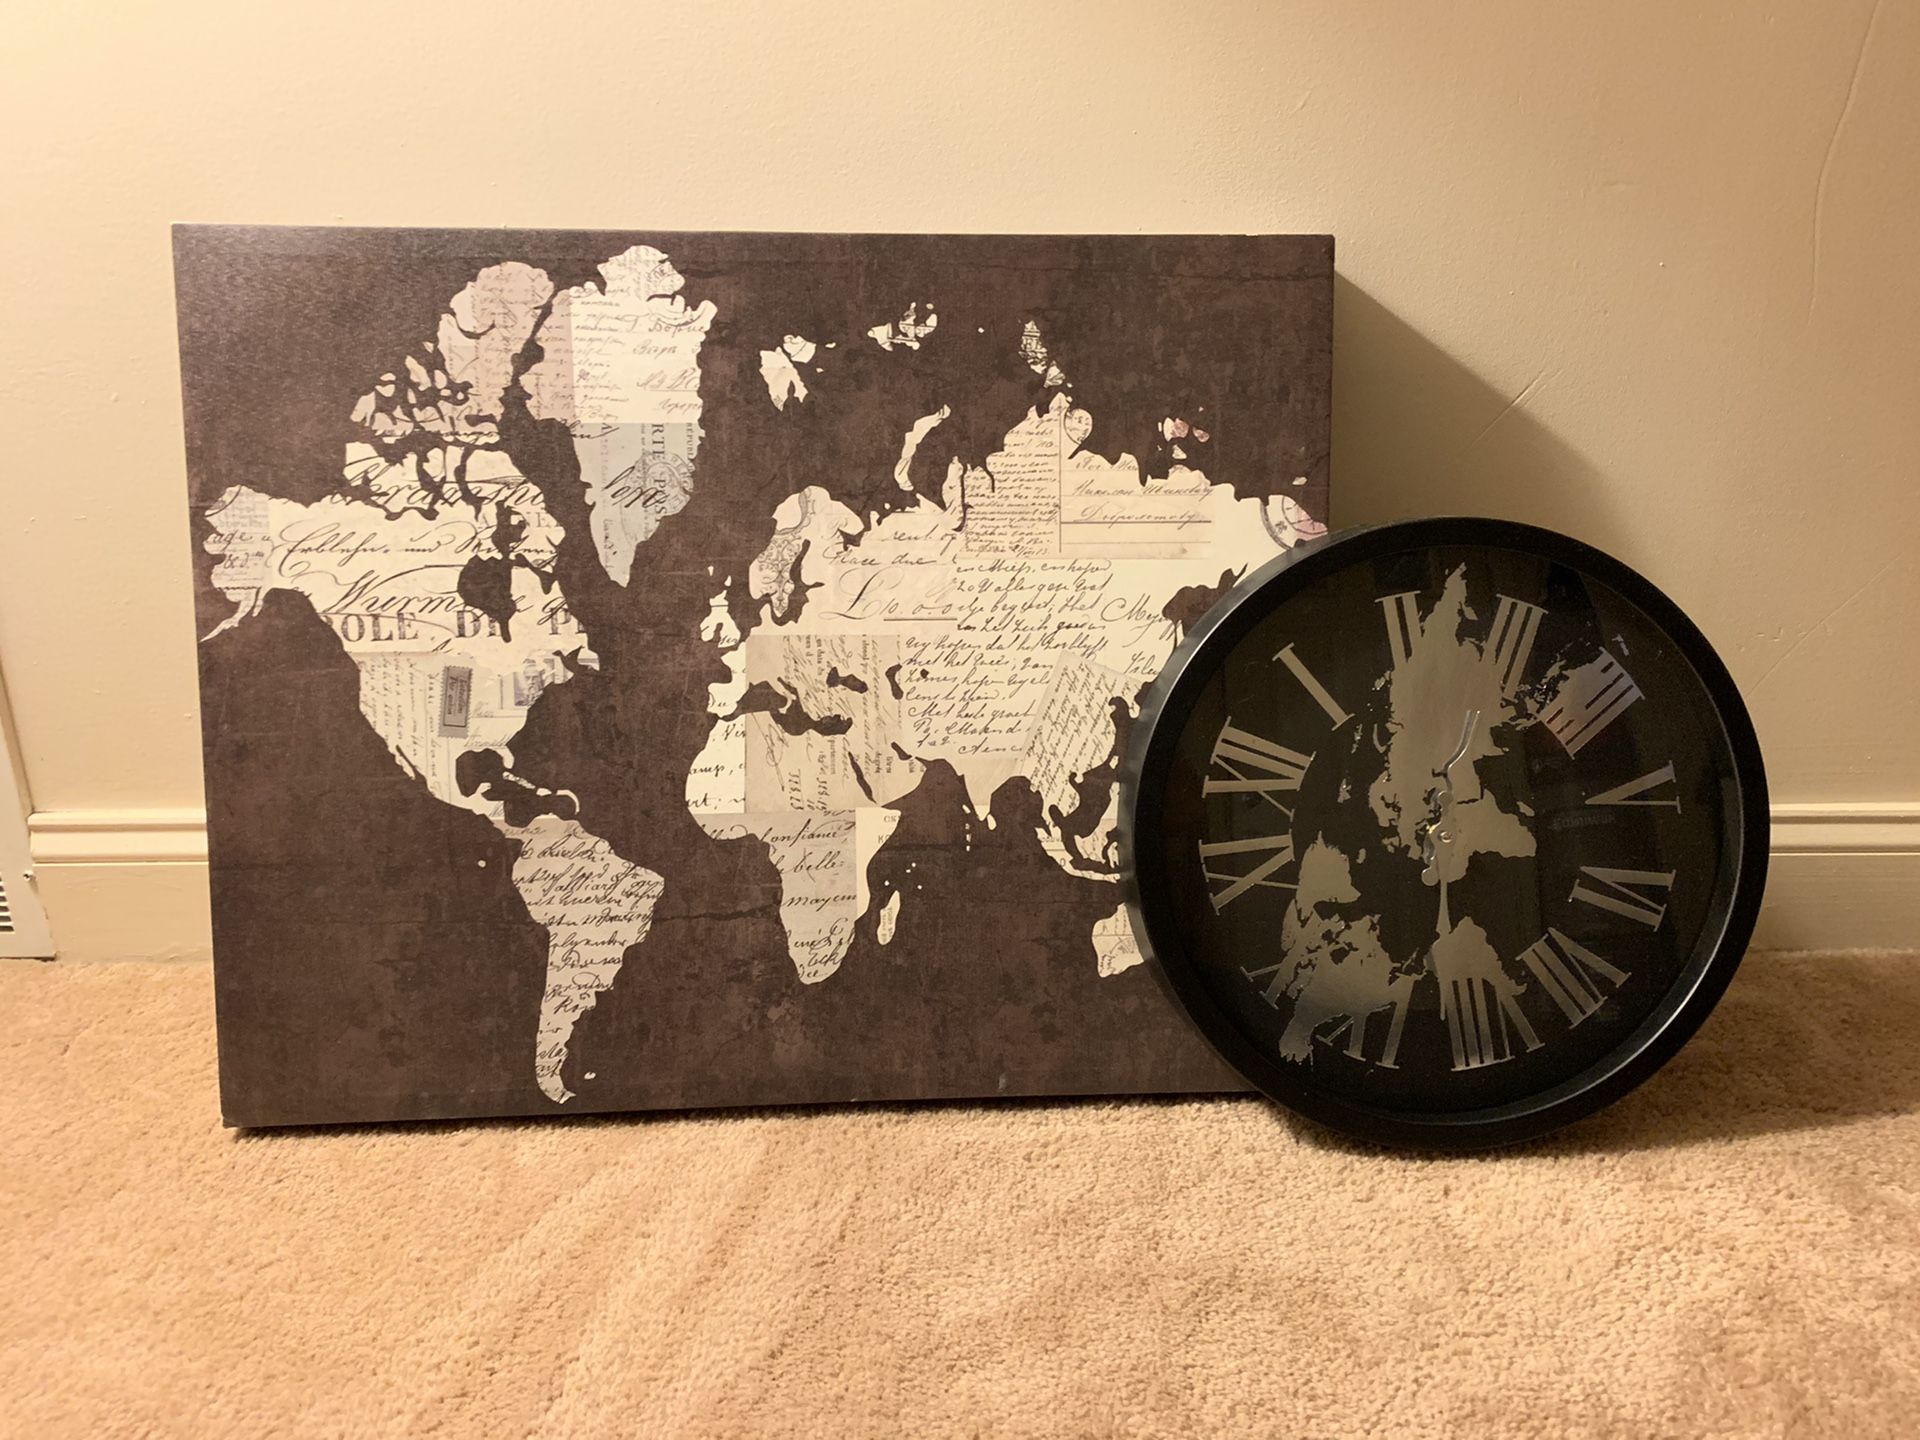 World canvas and world clock